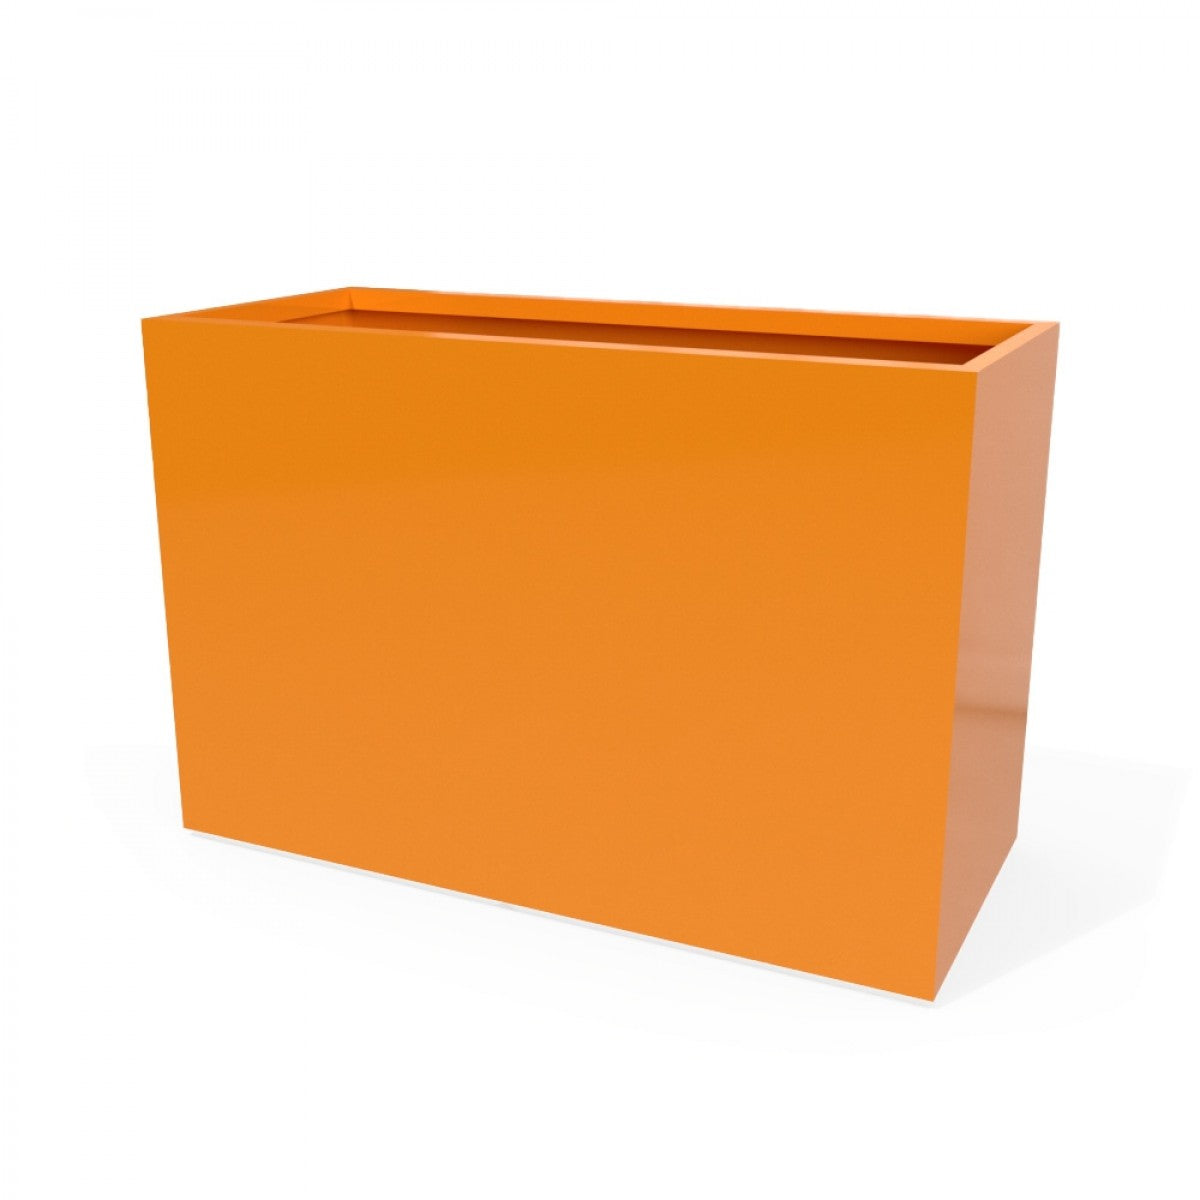 Tolga FIBERGLASS RECTANGULAR PLANTER BOX - Size 24"L x 16"W x 24"H